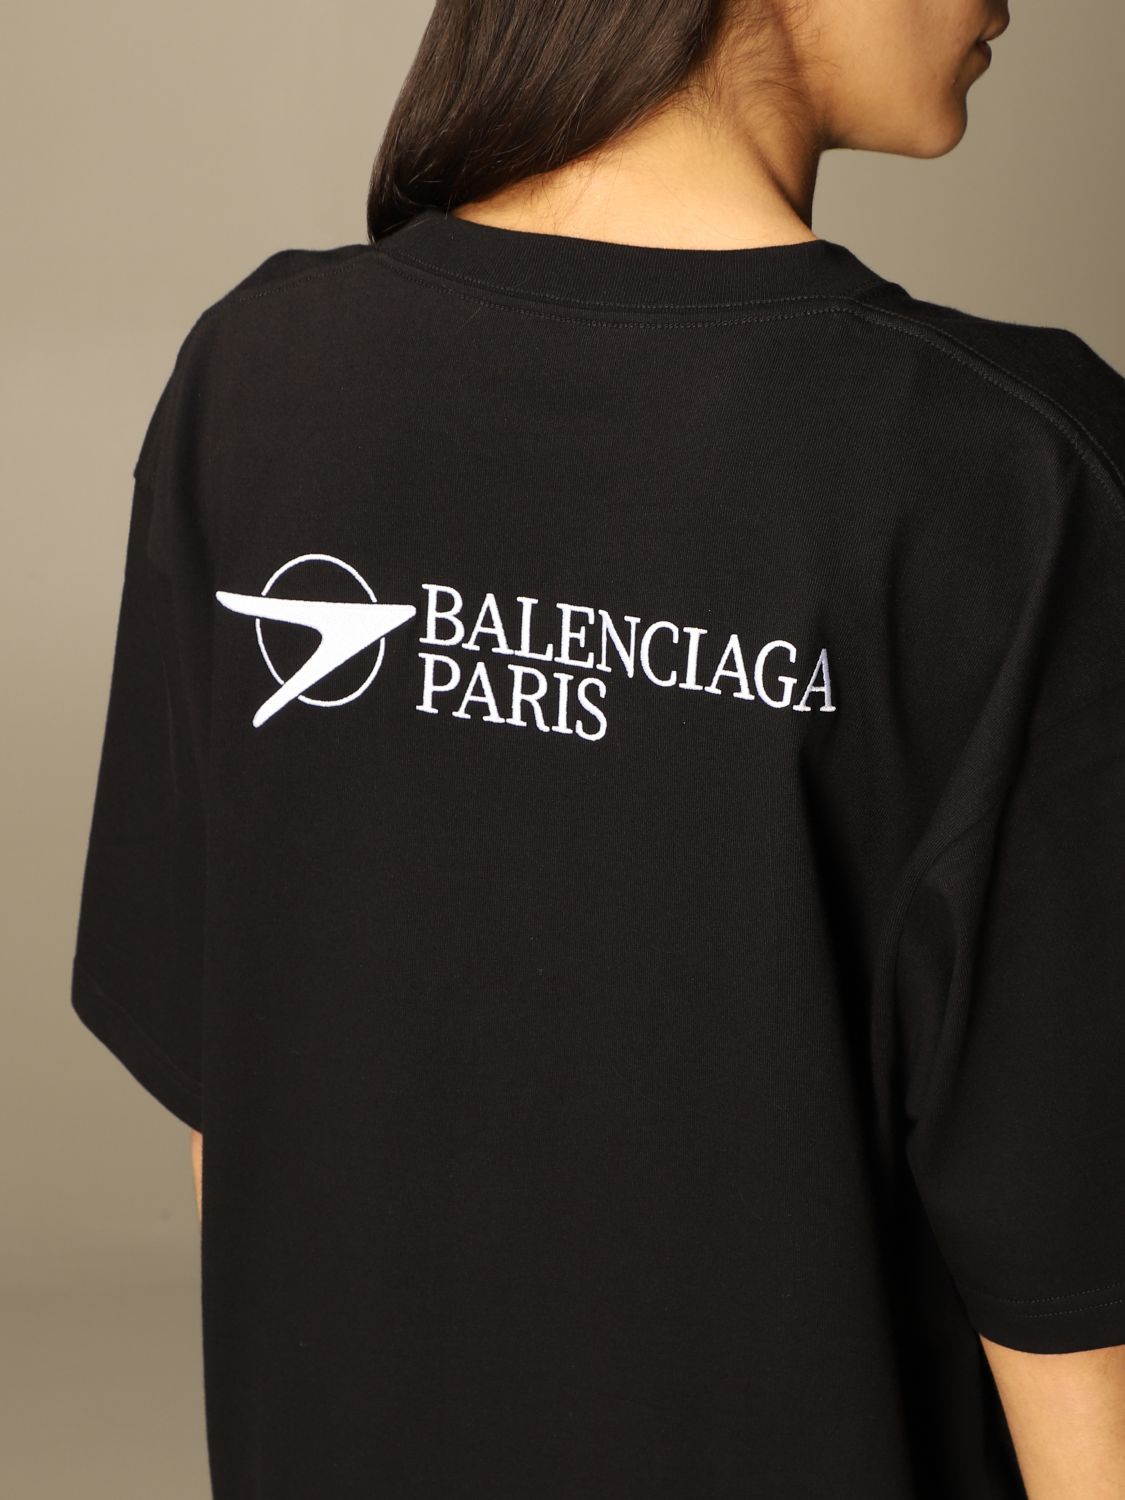 Signal Slumber Motivering BALENCIAGA: Damen T-Shirt - Schwarz | Balenciaga T-Shirt 641655 TKV86  online auf GIGLIO.COM